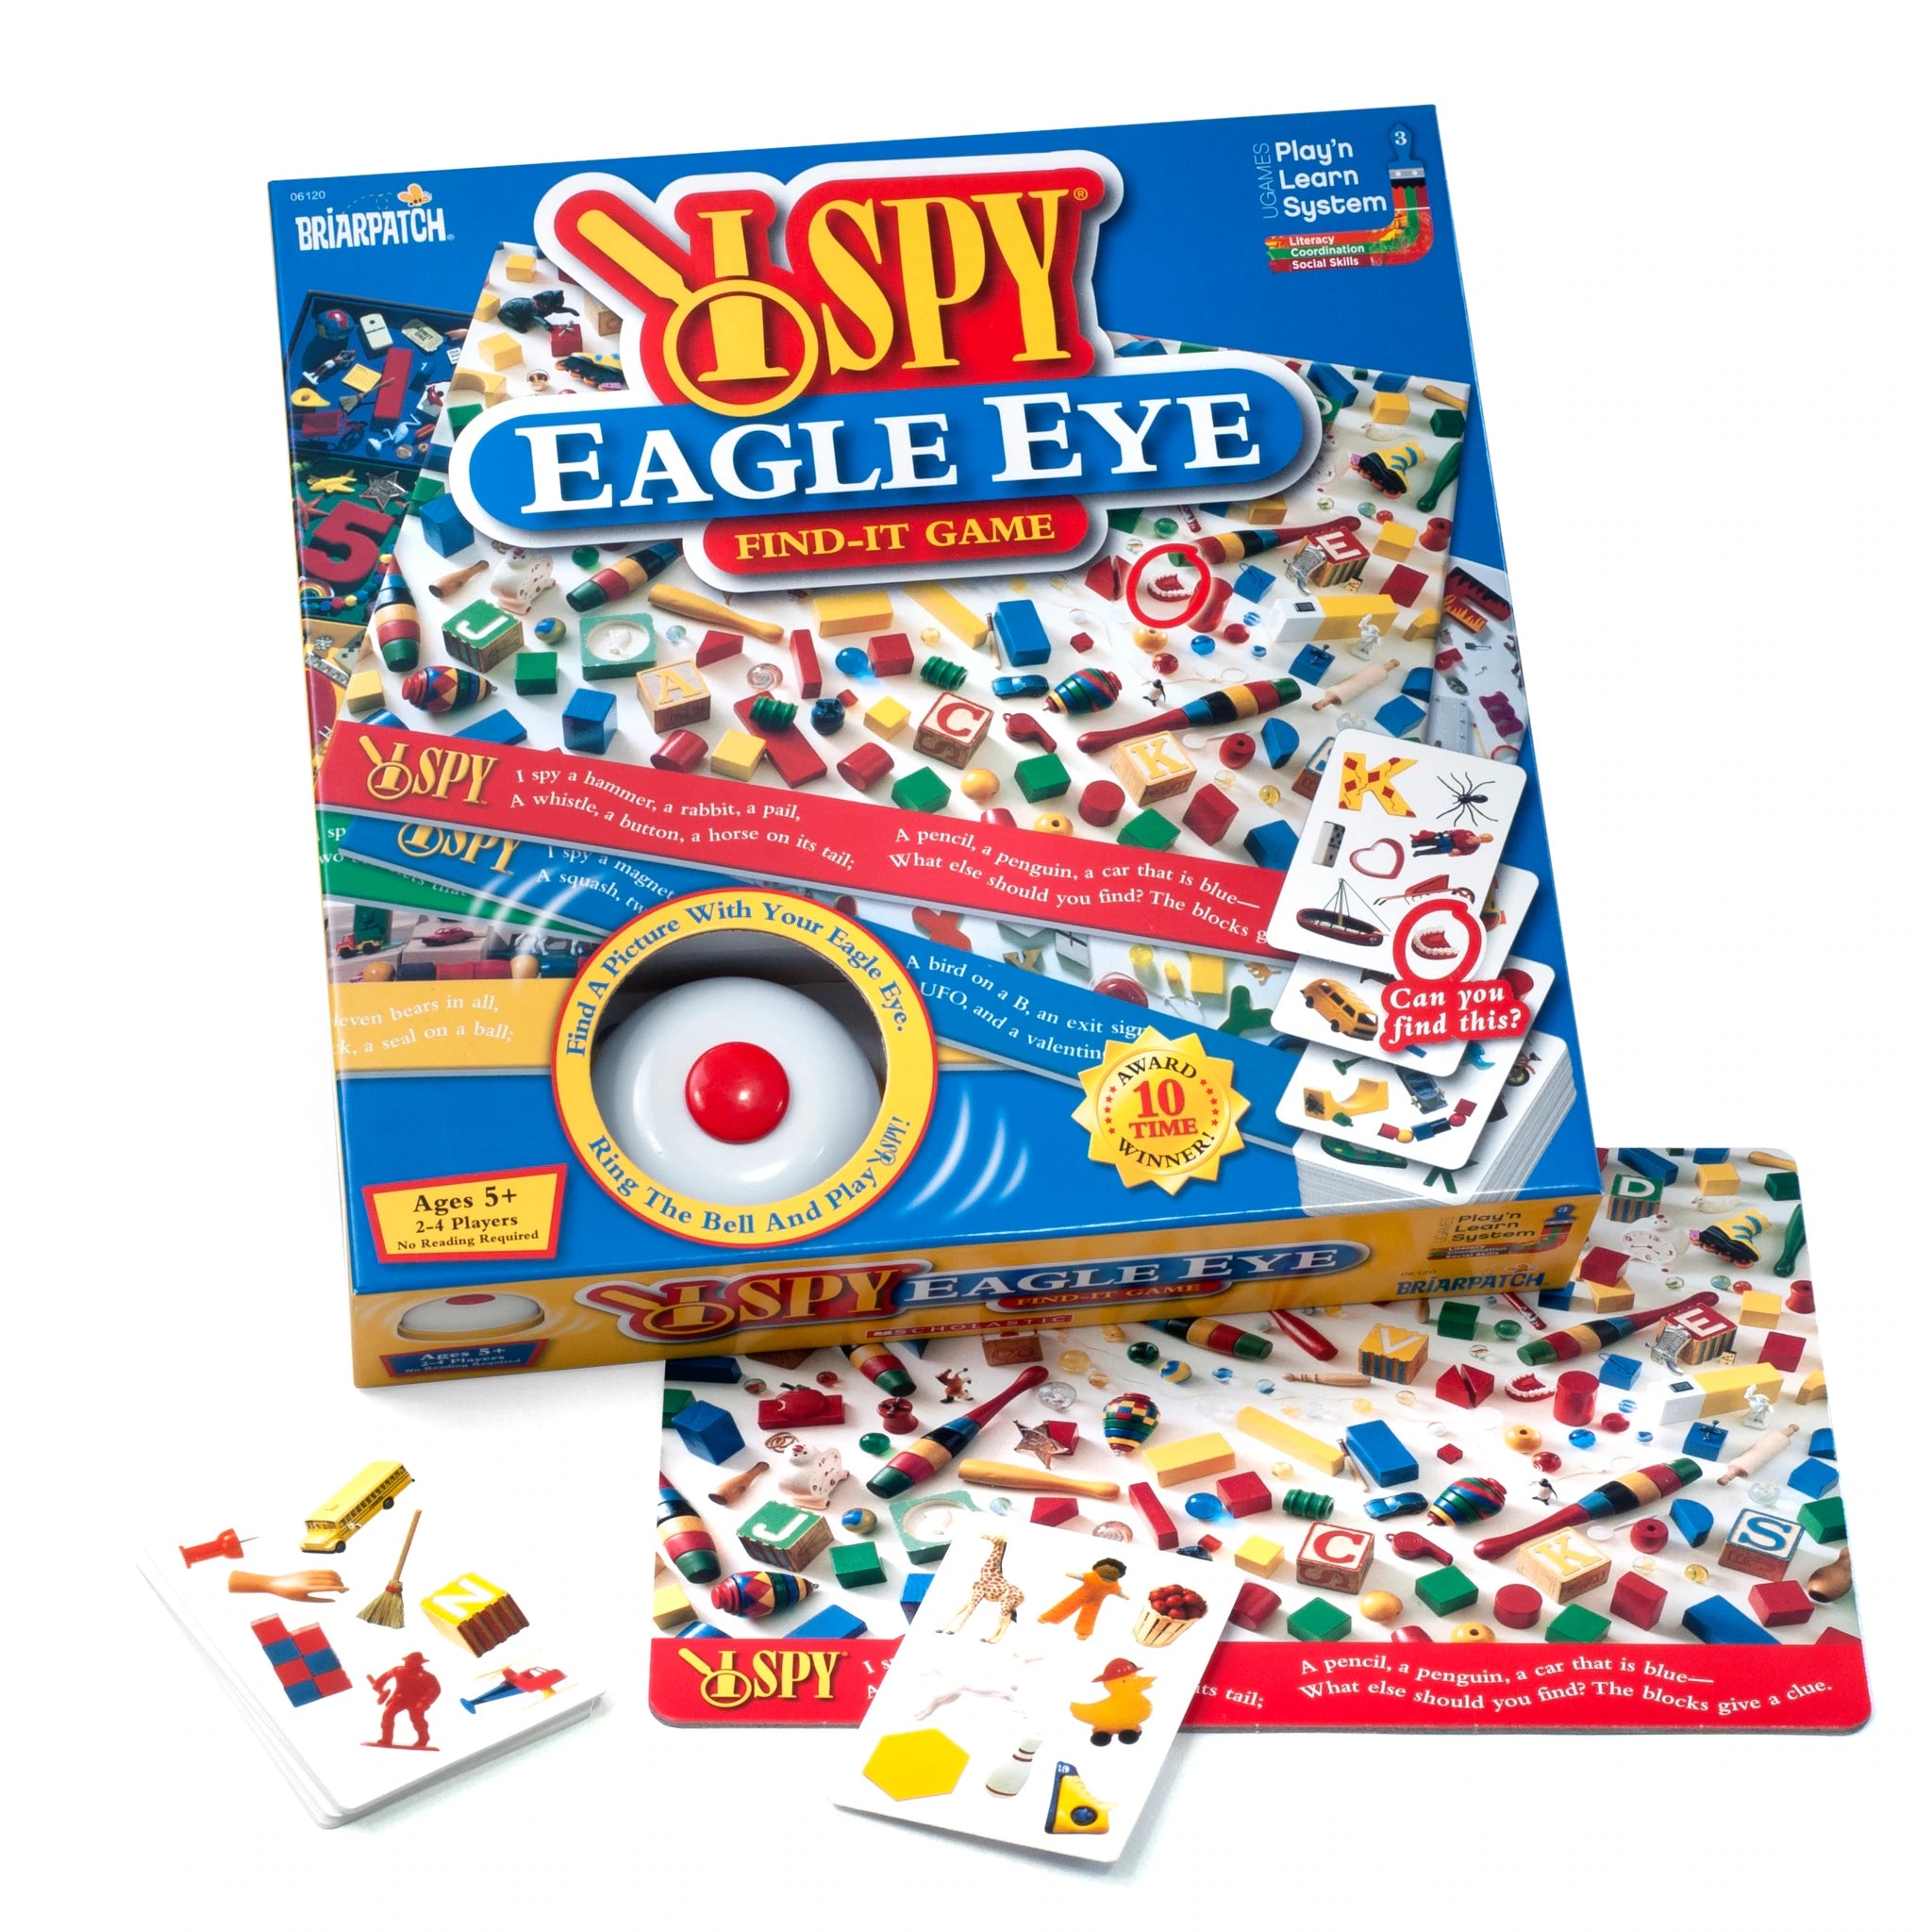 I Spy Eagle Eye Game - University Games - The Toy Room